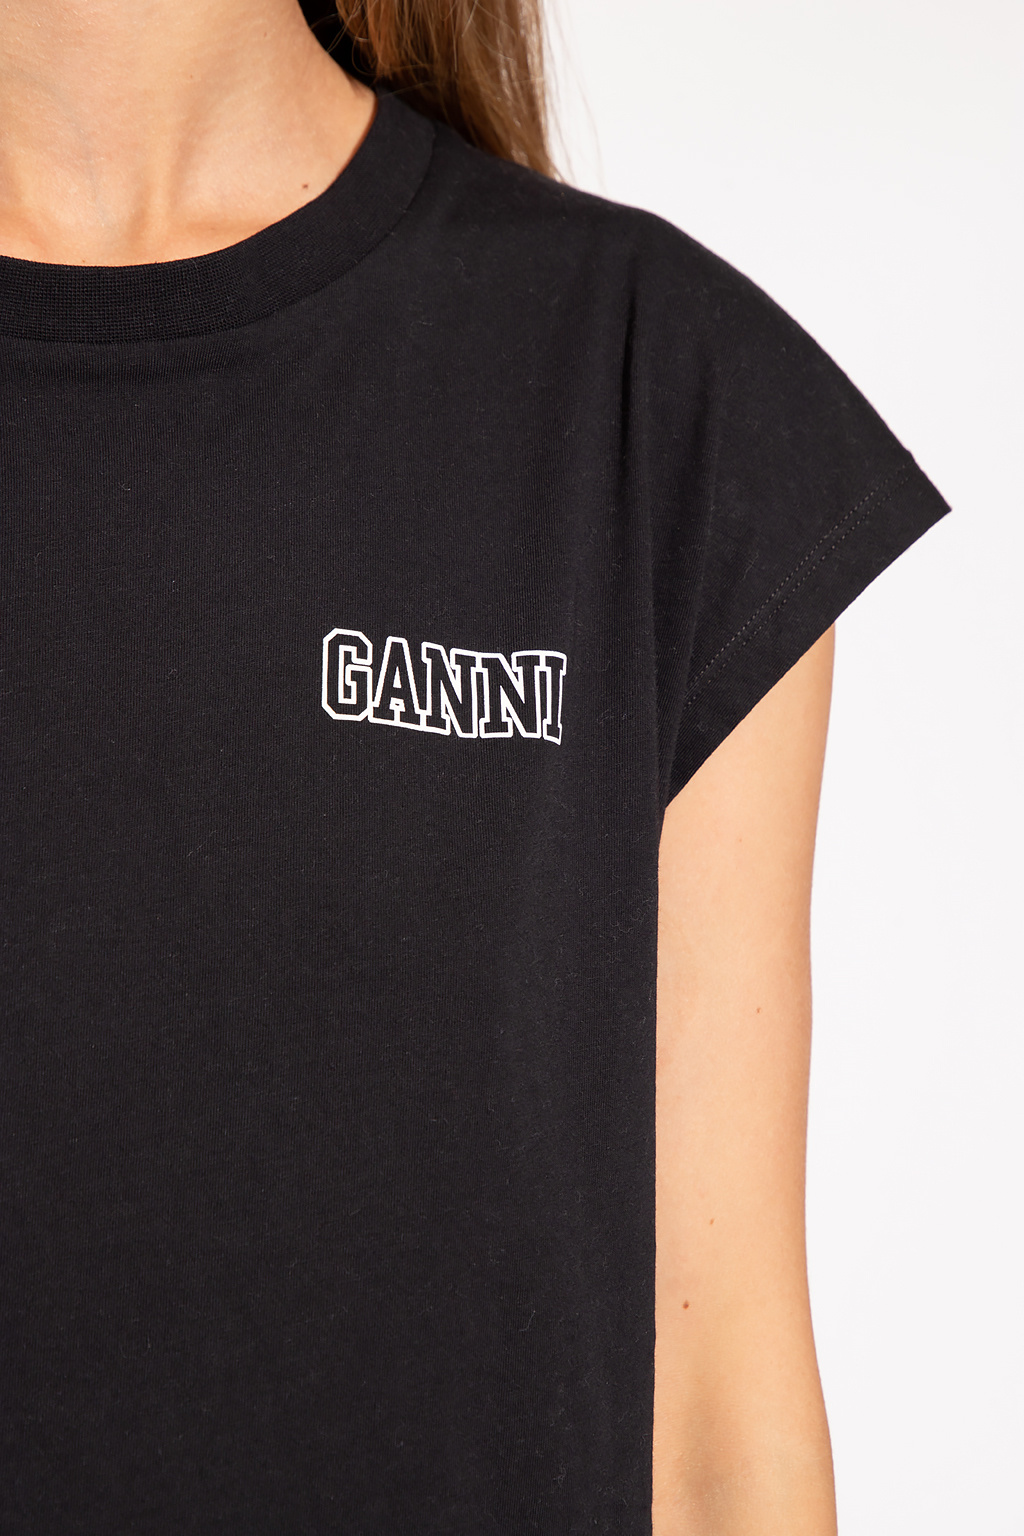 Ganni Night Shirts For Women